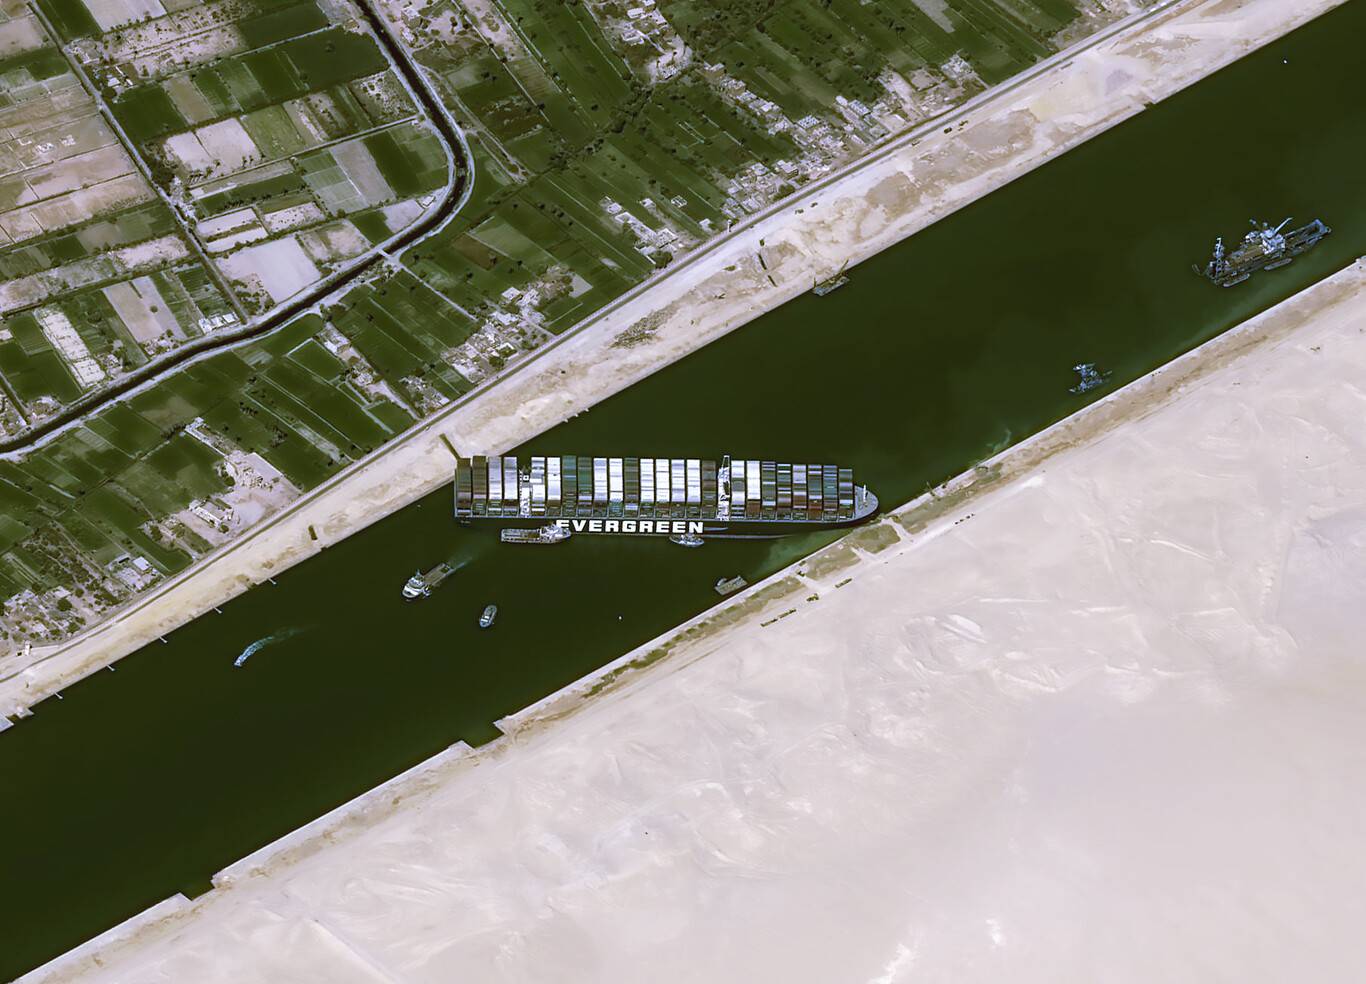 Canal de Suez - Ever Given